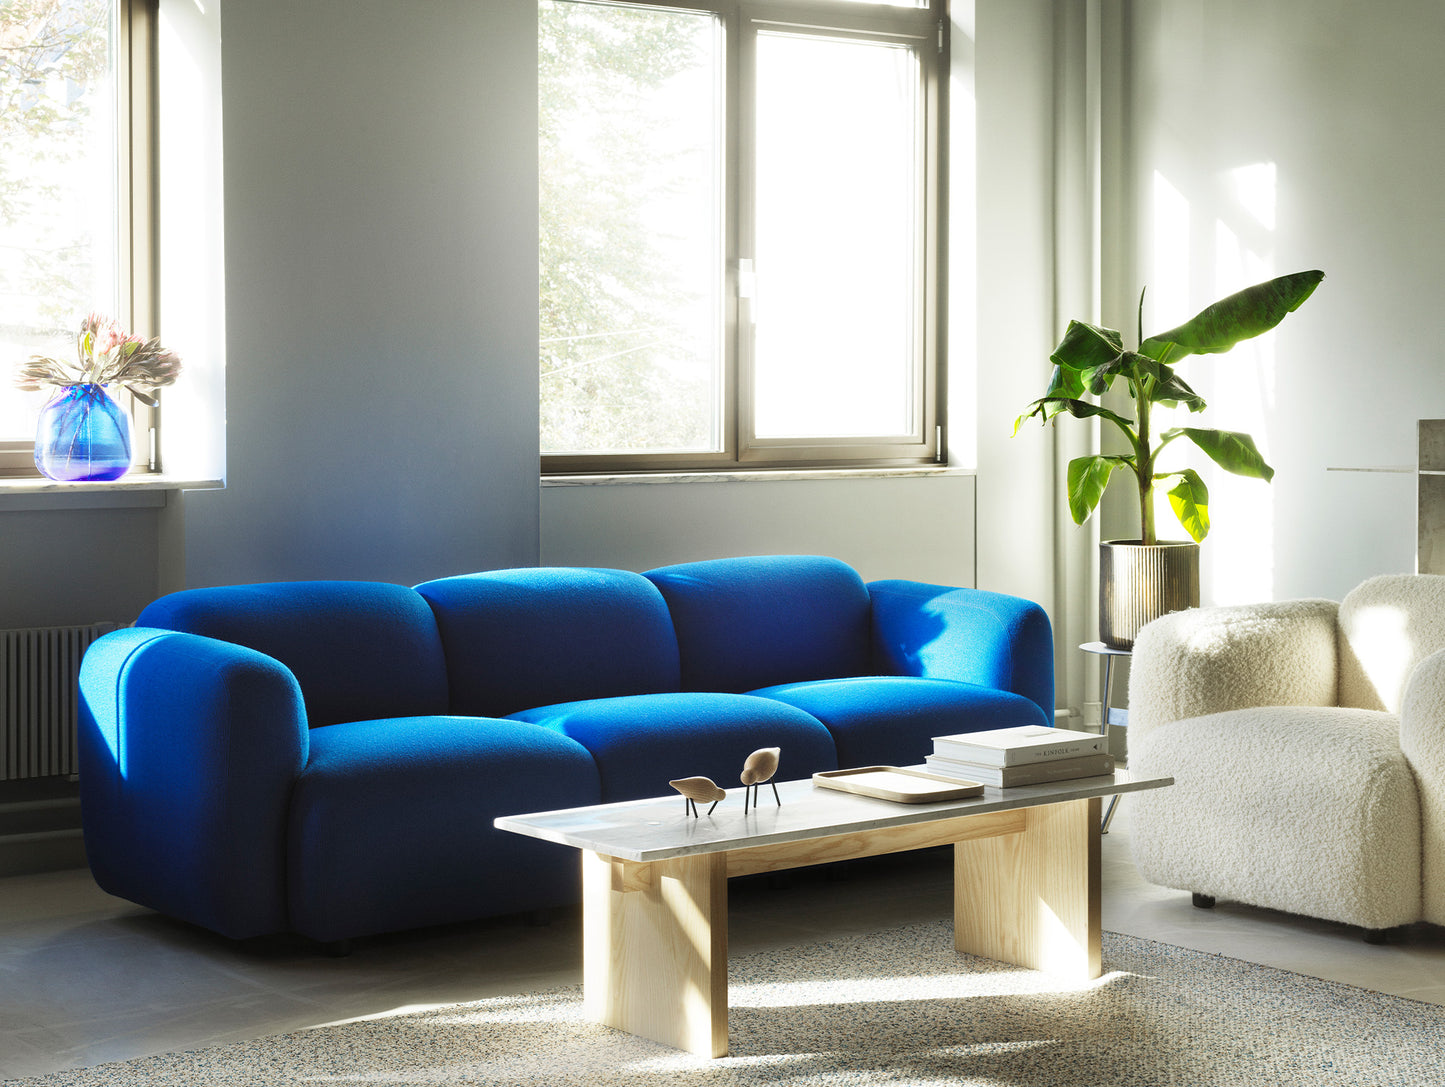 Swell Modular Sofa by Normann Copenhagen / Hallingdal 65 750